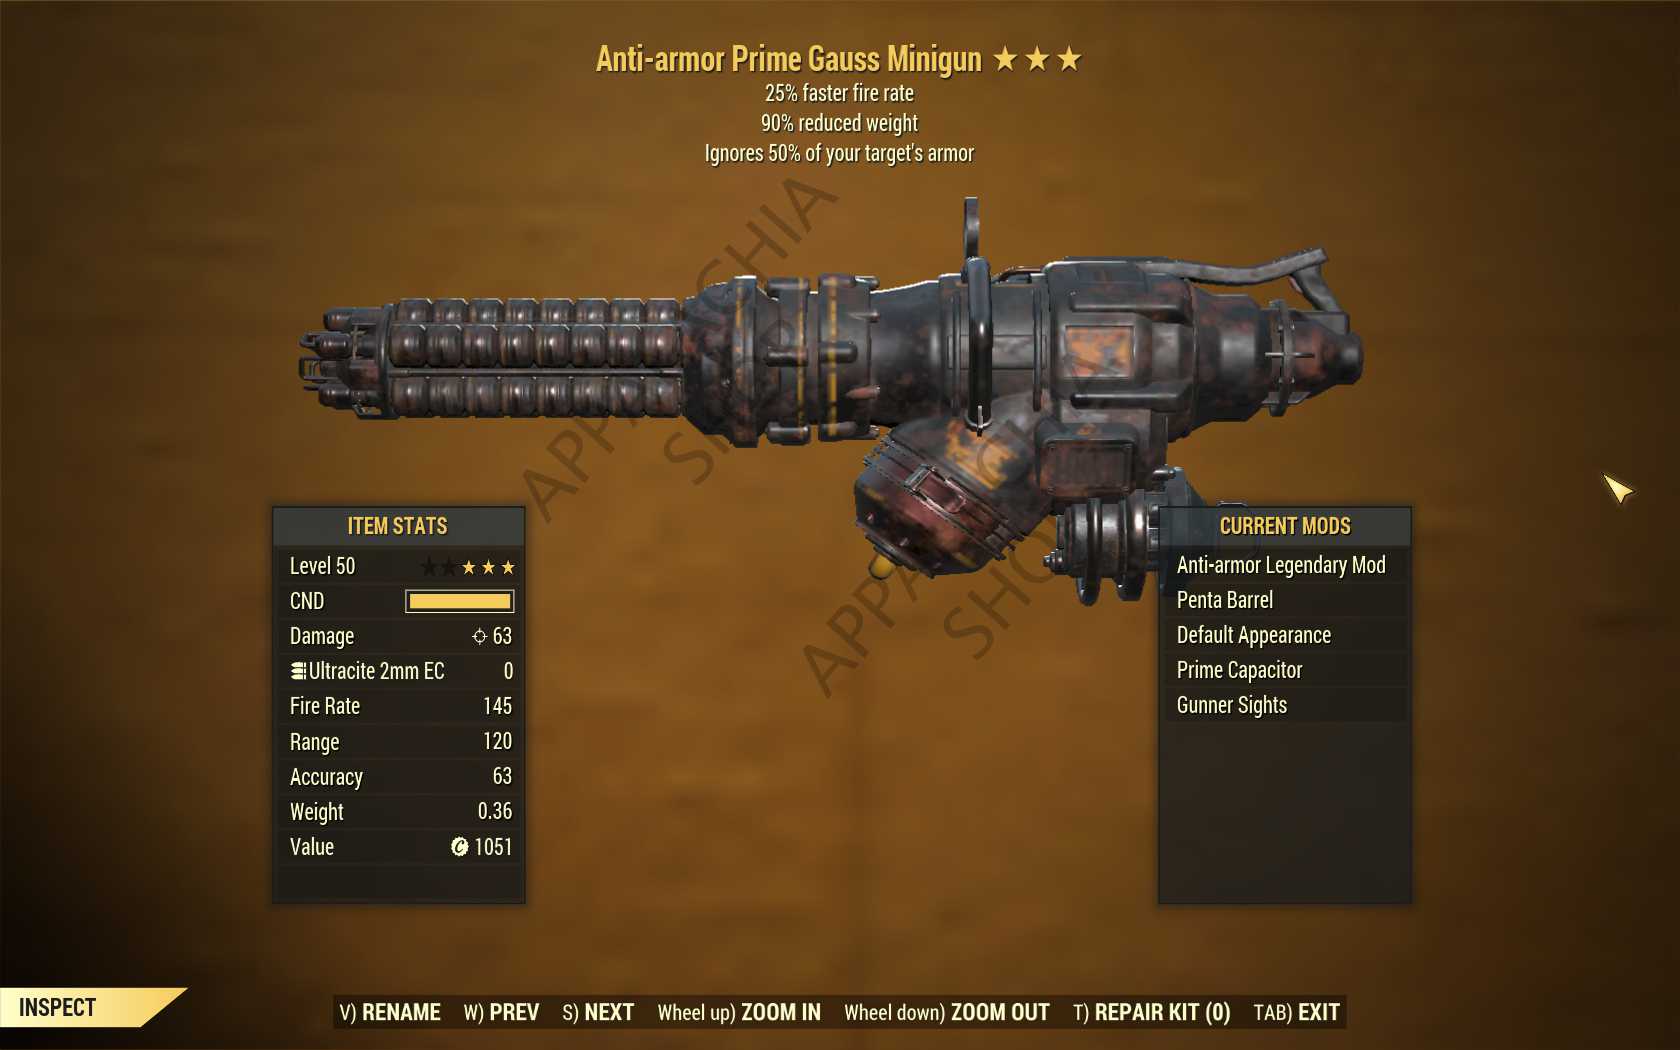 Anti-armor Gauss Minigun (25% faster fire rate, 90% reduced weight)[FULL MODS]